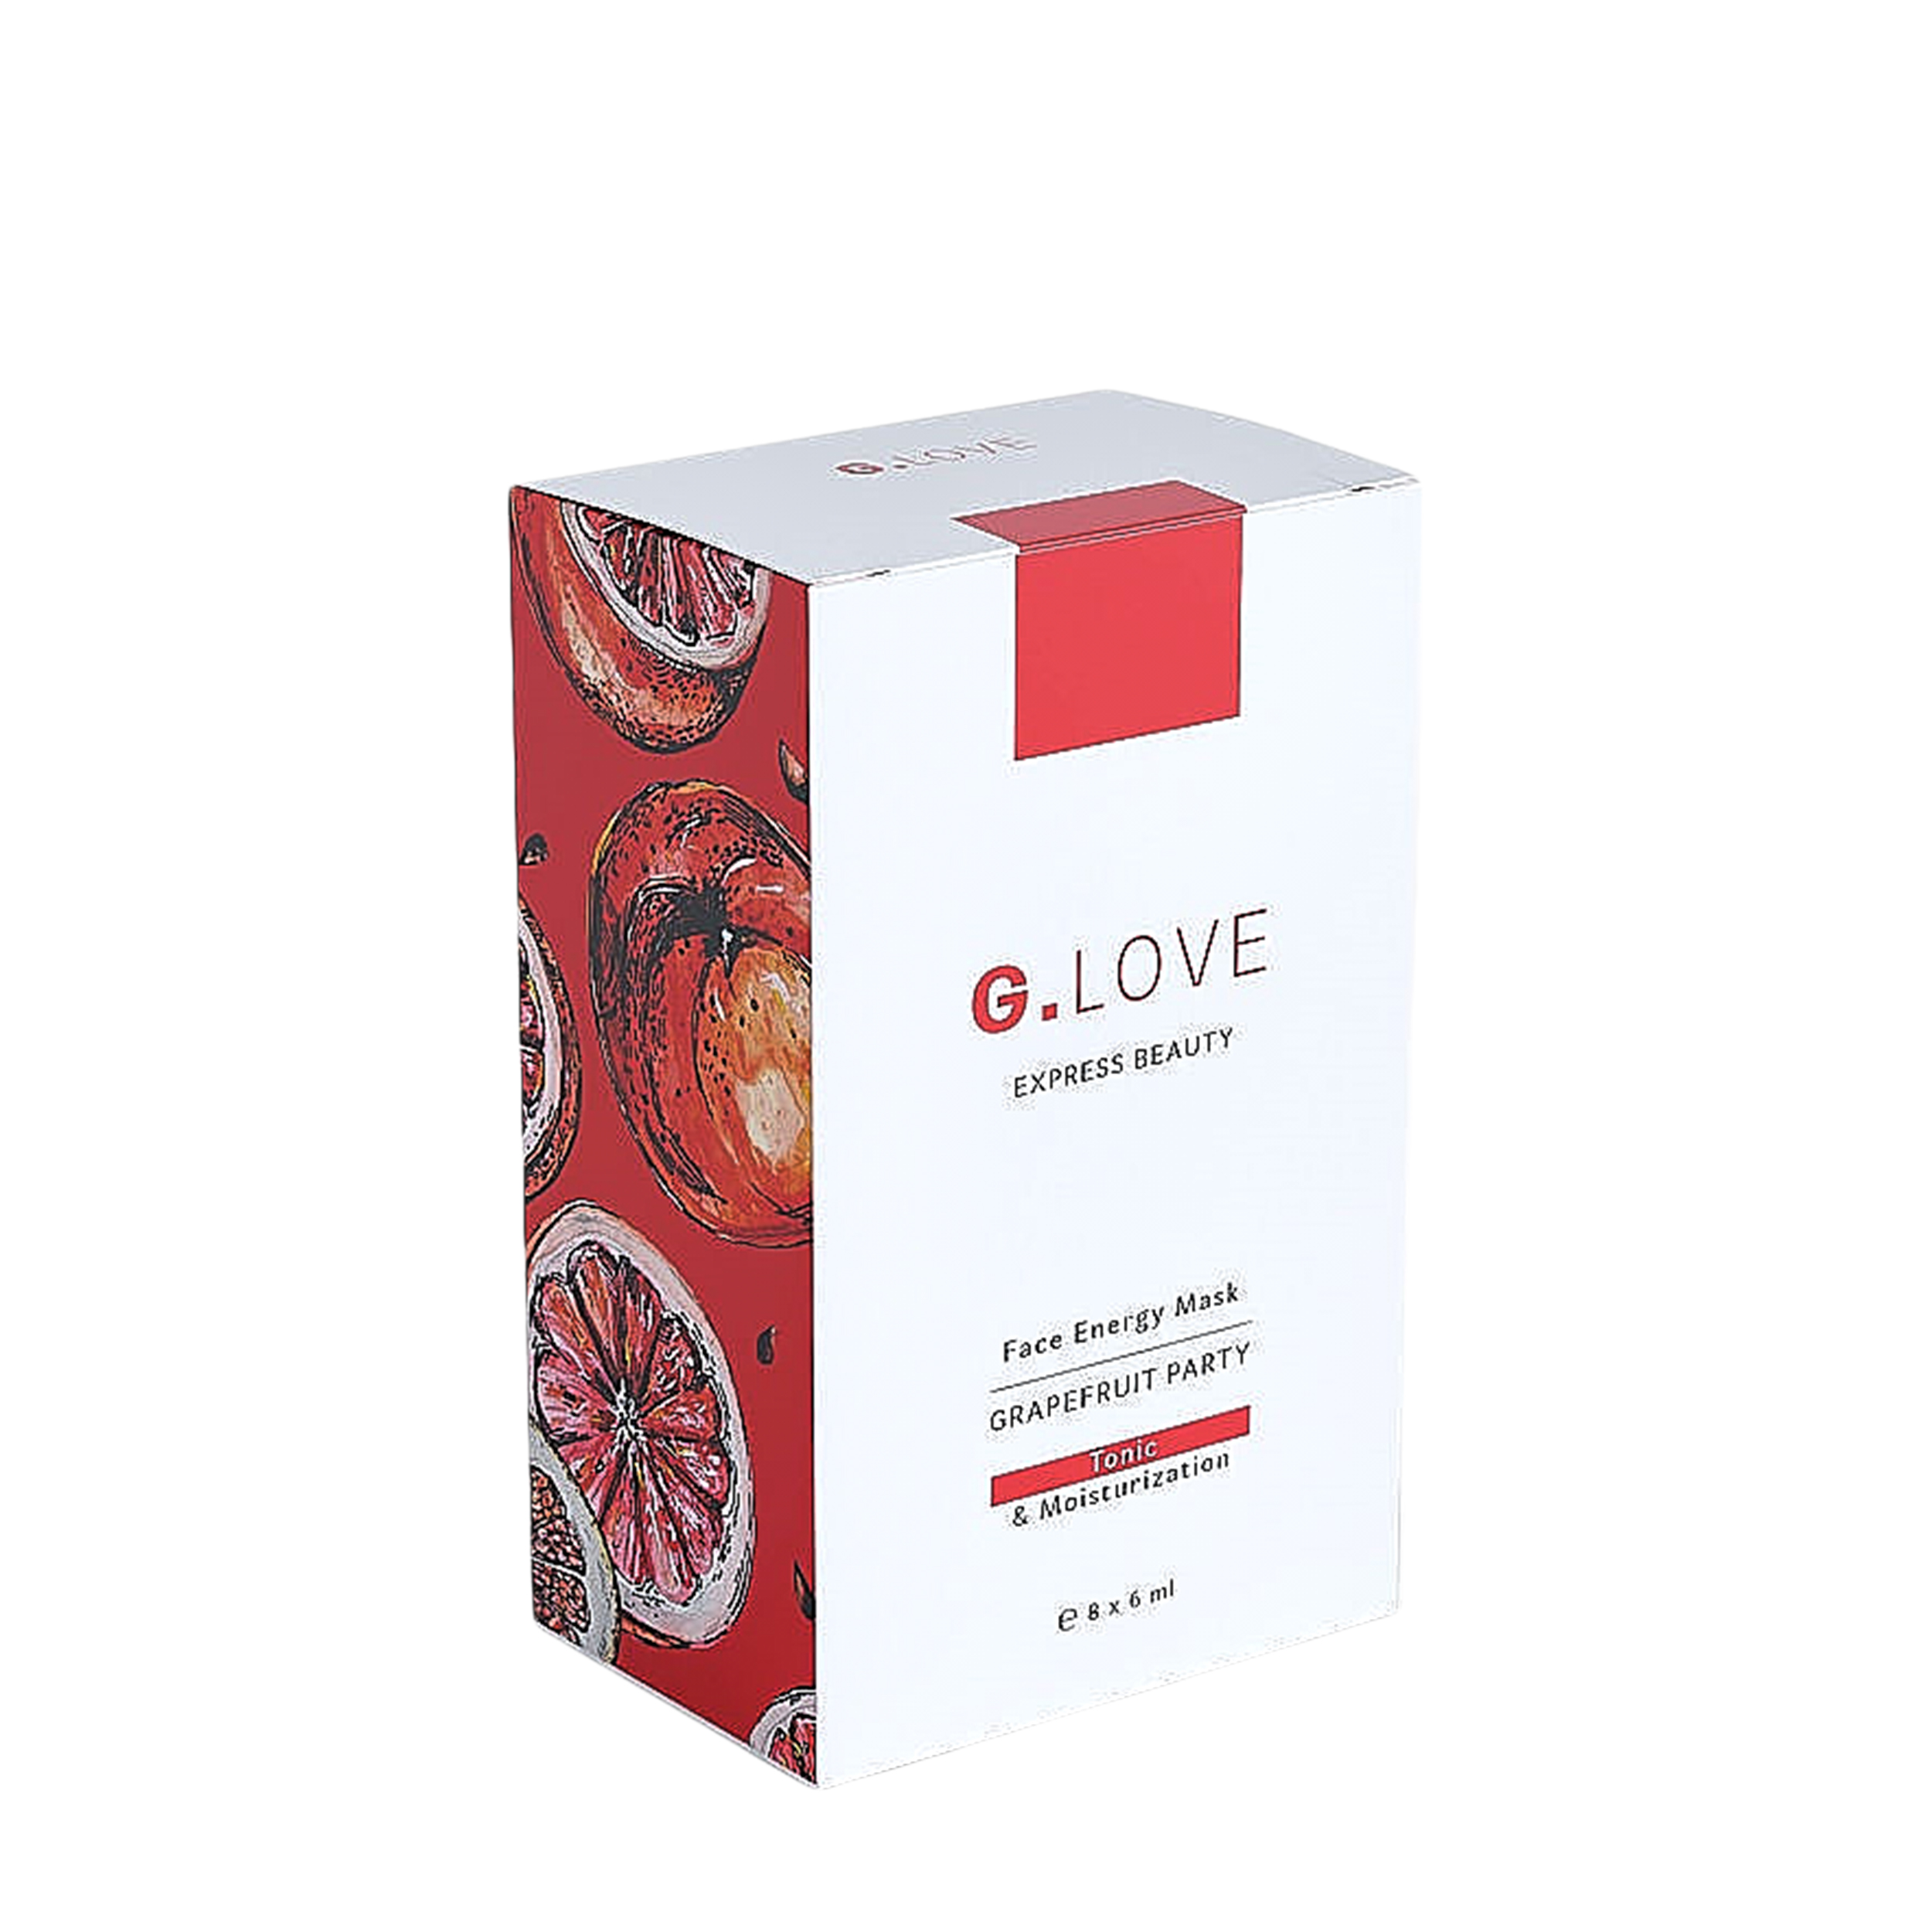 G.LOVE G.LOVE Тонизирующая увлажняющая маска для лица Grapefruit Party 8x6 мл от Foambox